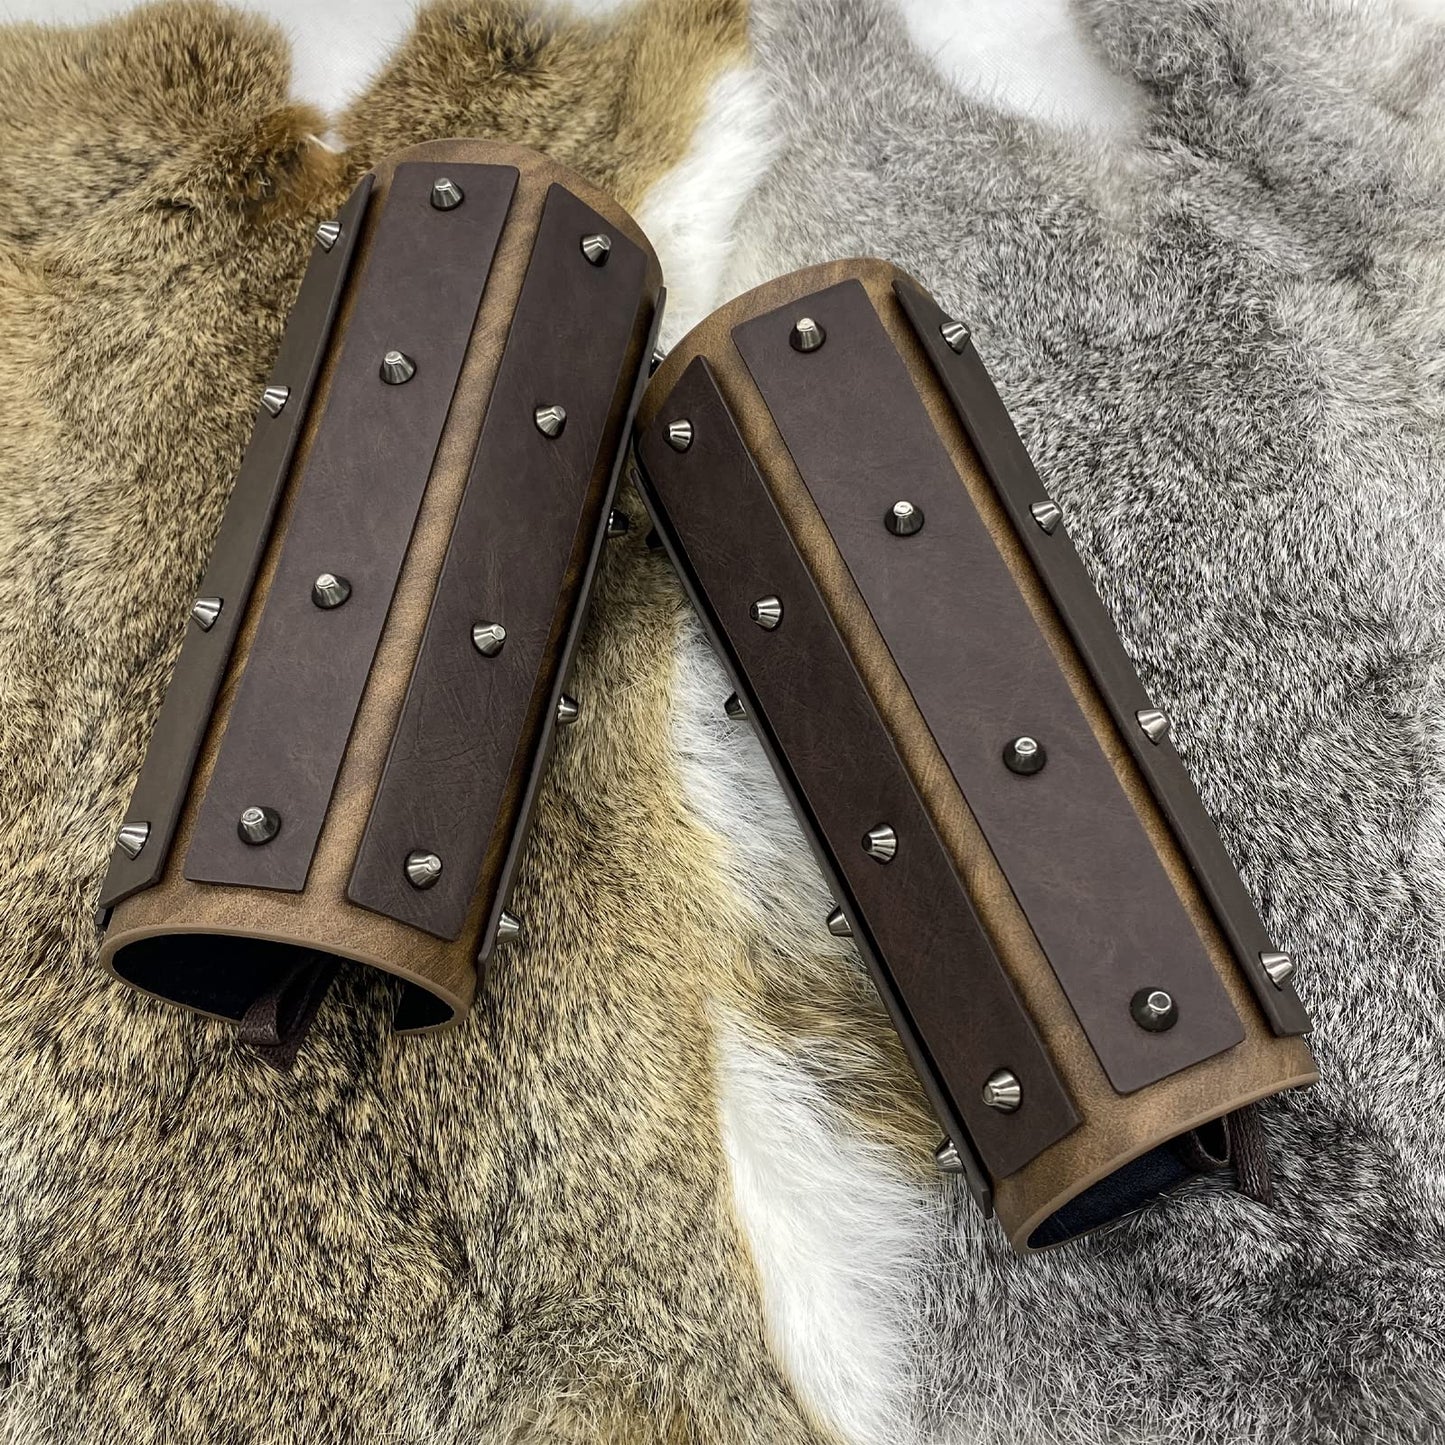 JAOYU Leather Bracer Medieval Vambrace Wrist Armor Arm Cuff Viking Arm Guard Leather Gauntlet Wristband LARP Accessories 2PCS Jyph060-brown